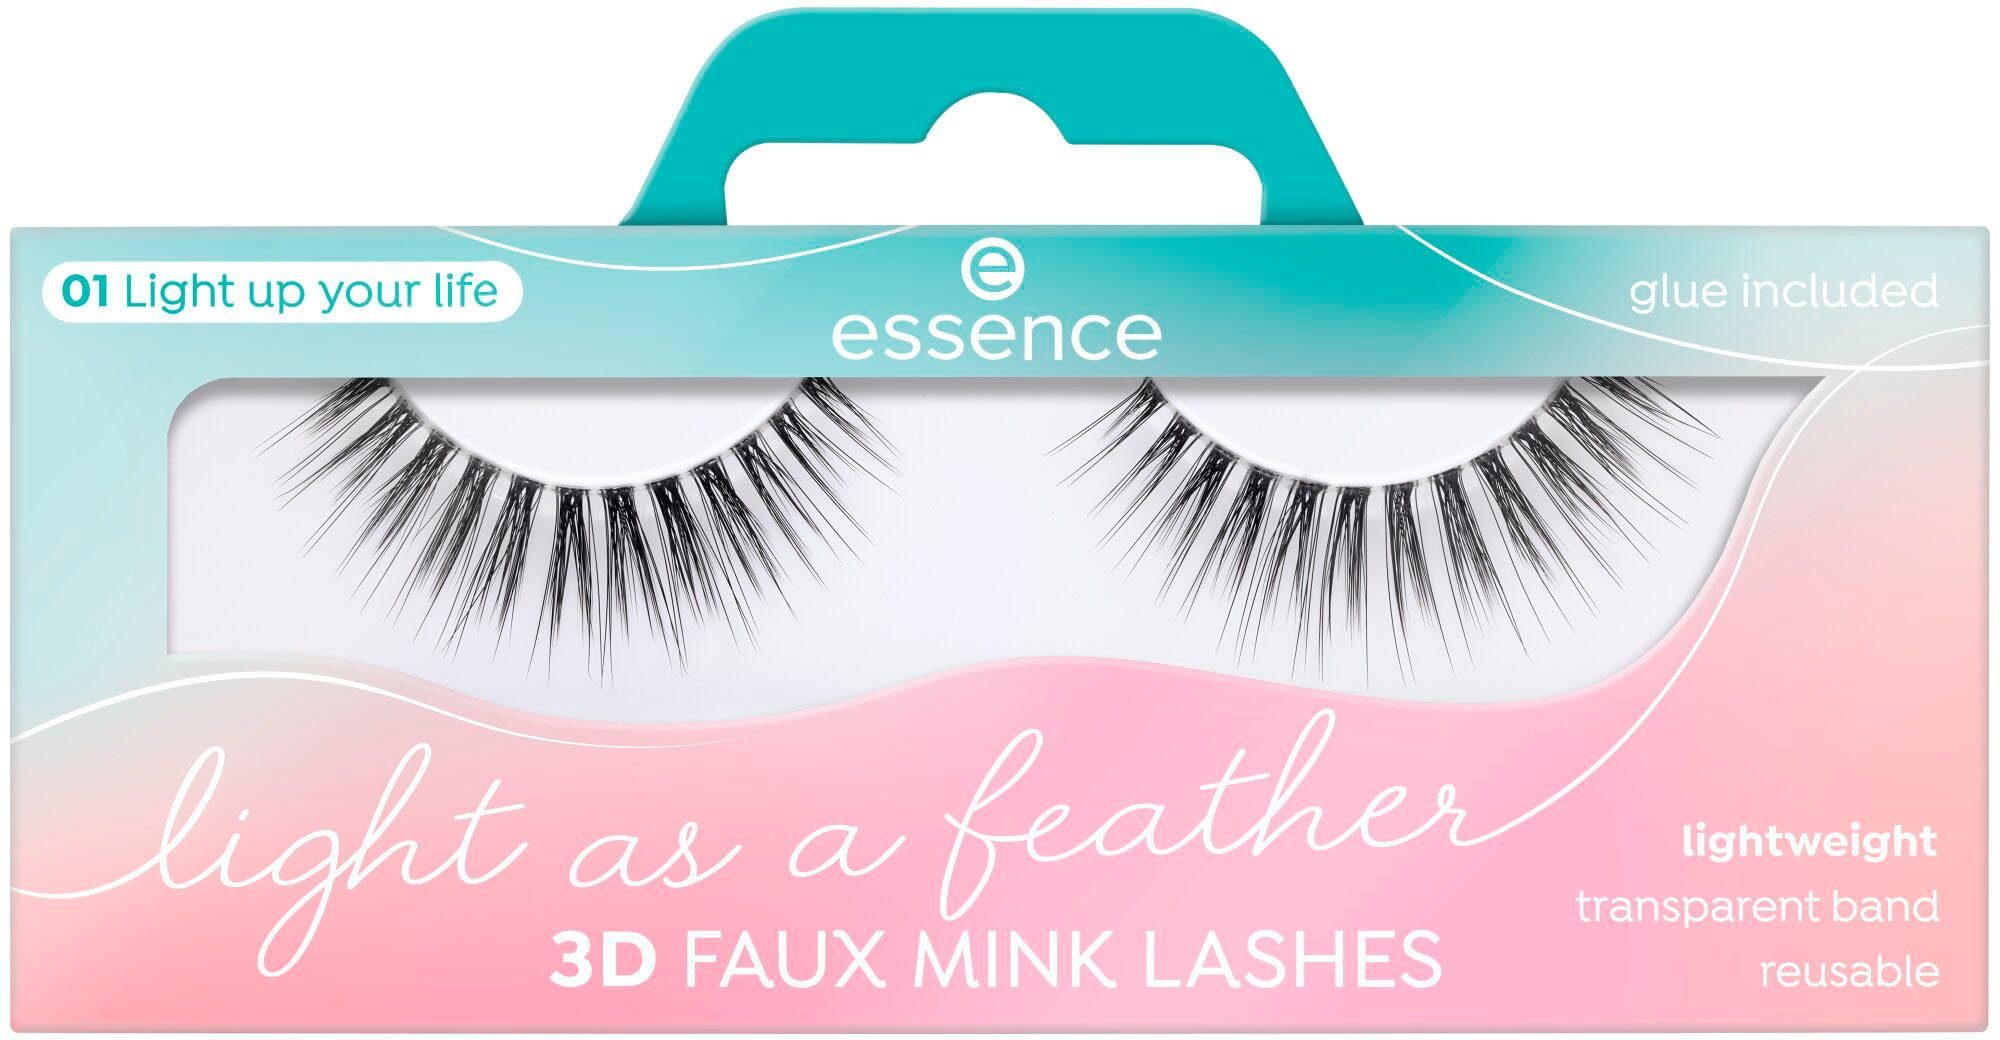 Essence Bandwimpern tlg. a Set, mink 3 as faux lashes, Light feather 3D